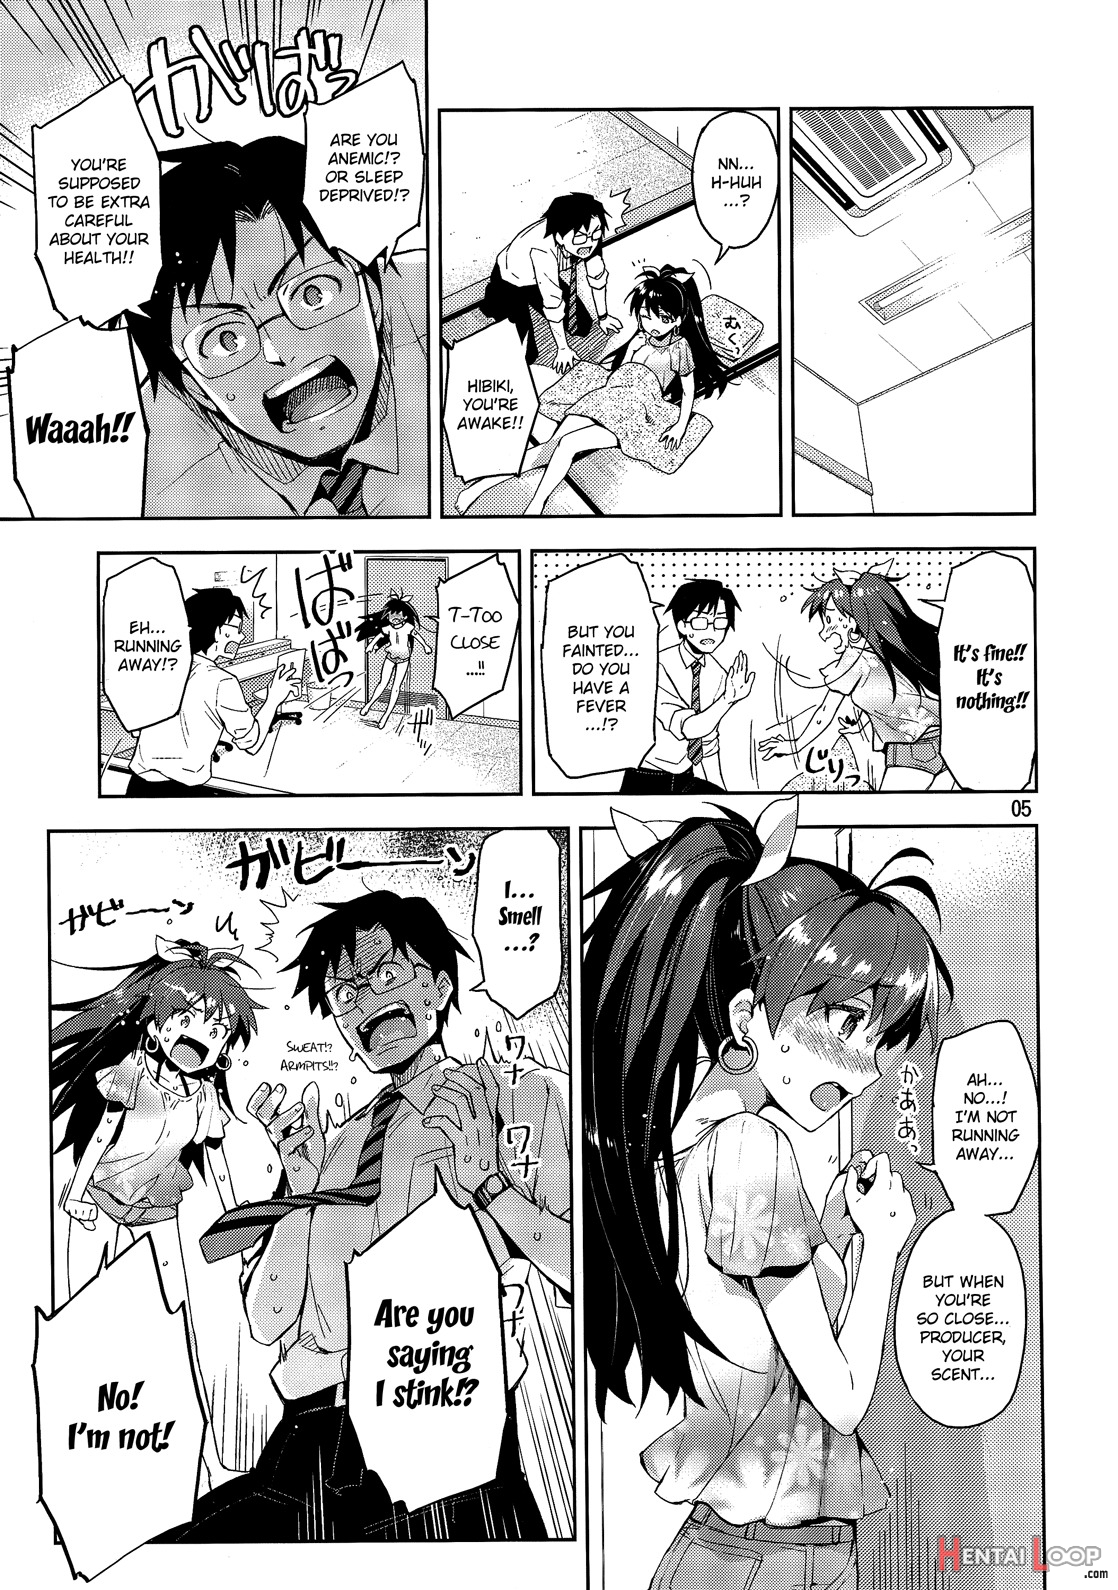 Hibiki Is In Heat! page 4